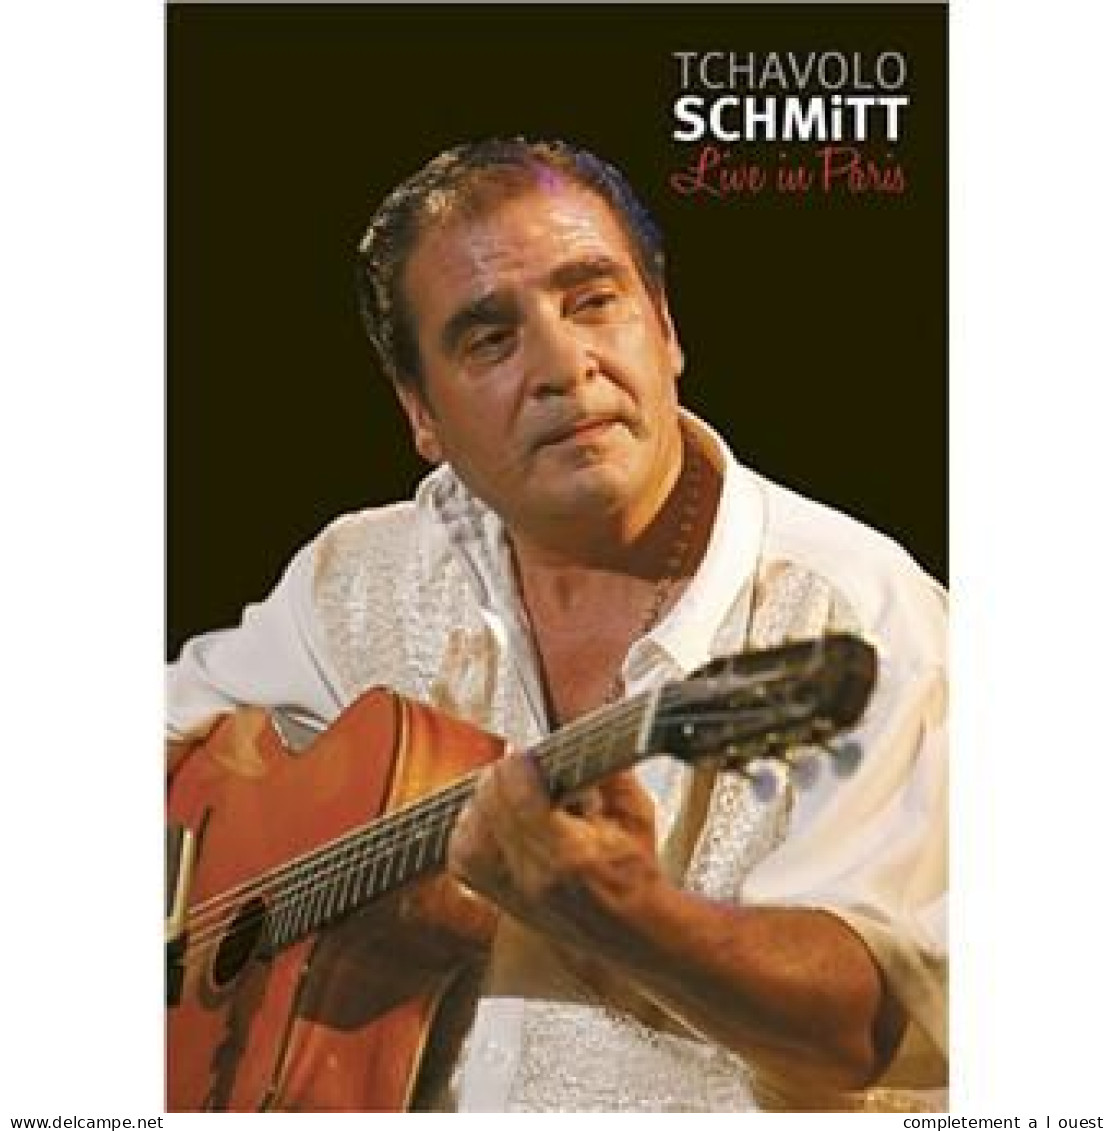 Tchavolo Schmitt Live In Paris Alambra 2008 DVD Jazz Manouche Guitare Gipsy Django Reinhardt - DVD Musicaux